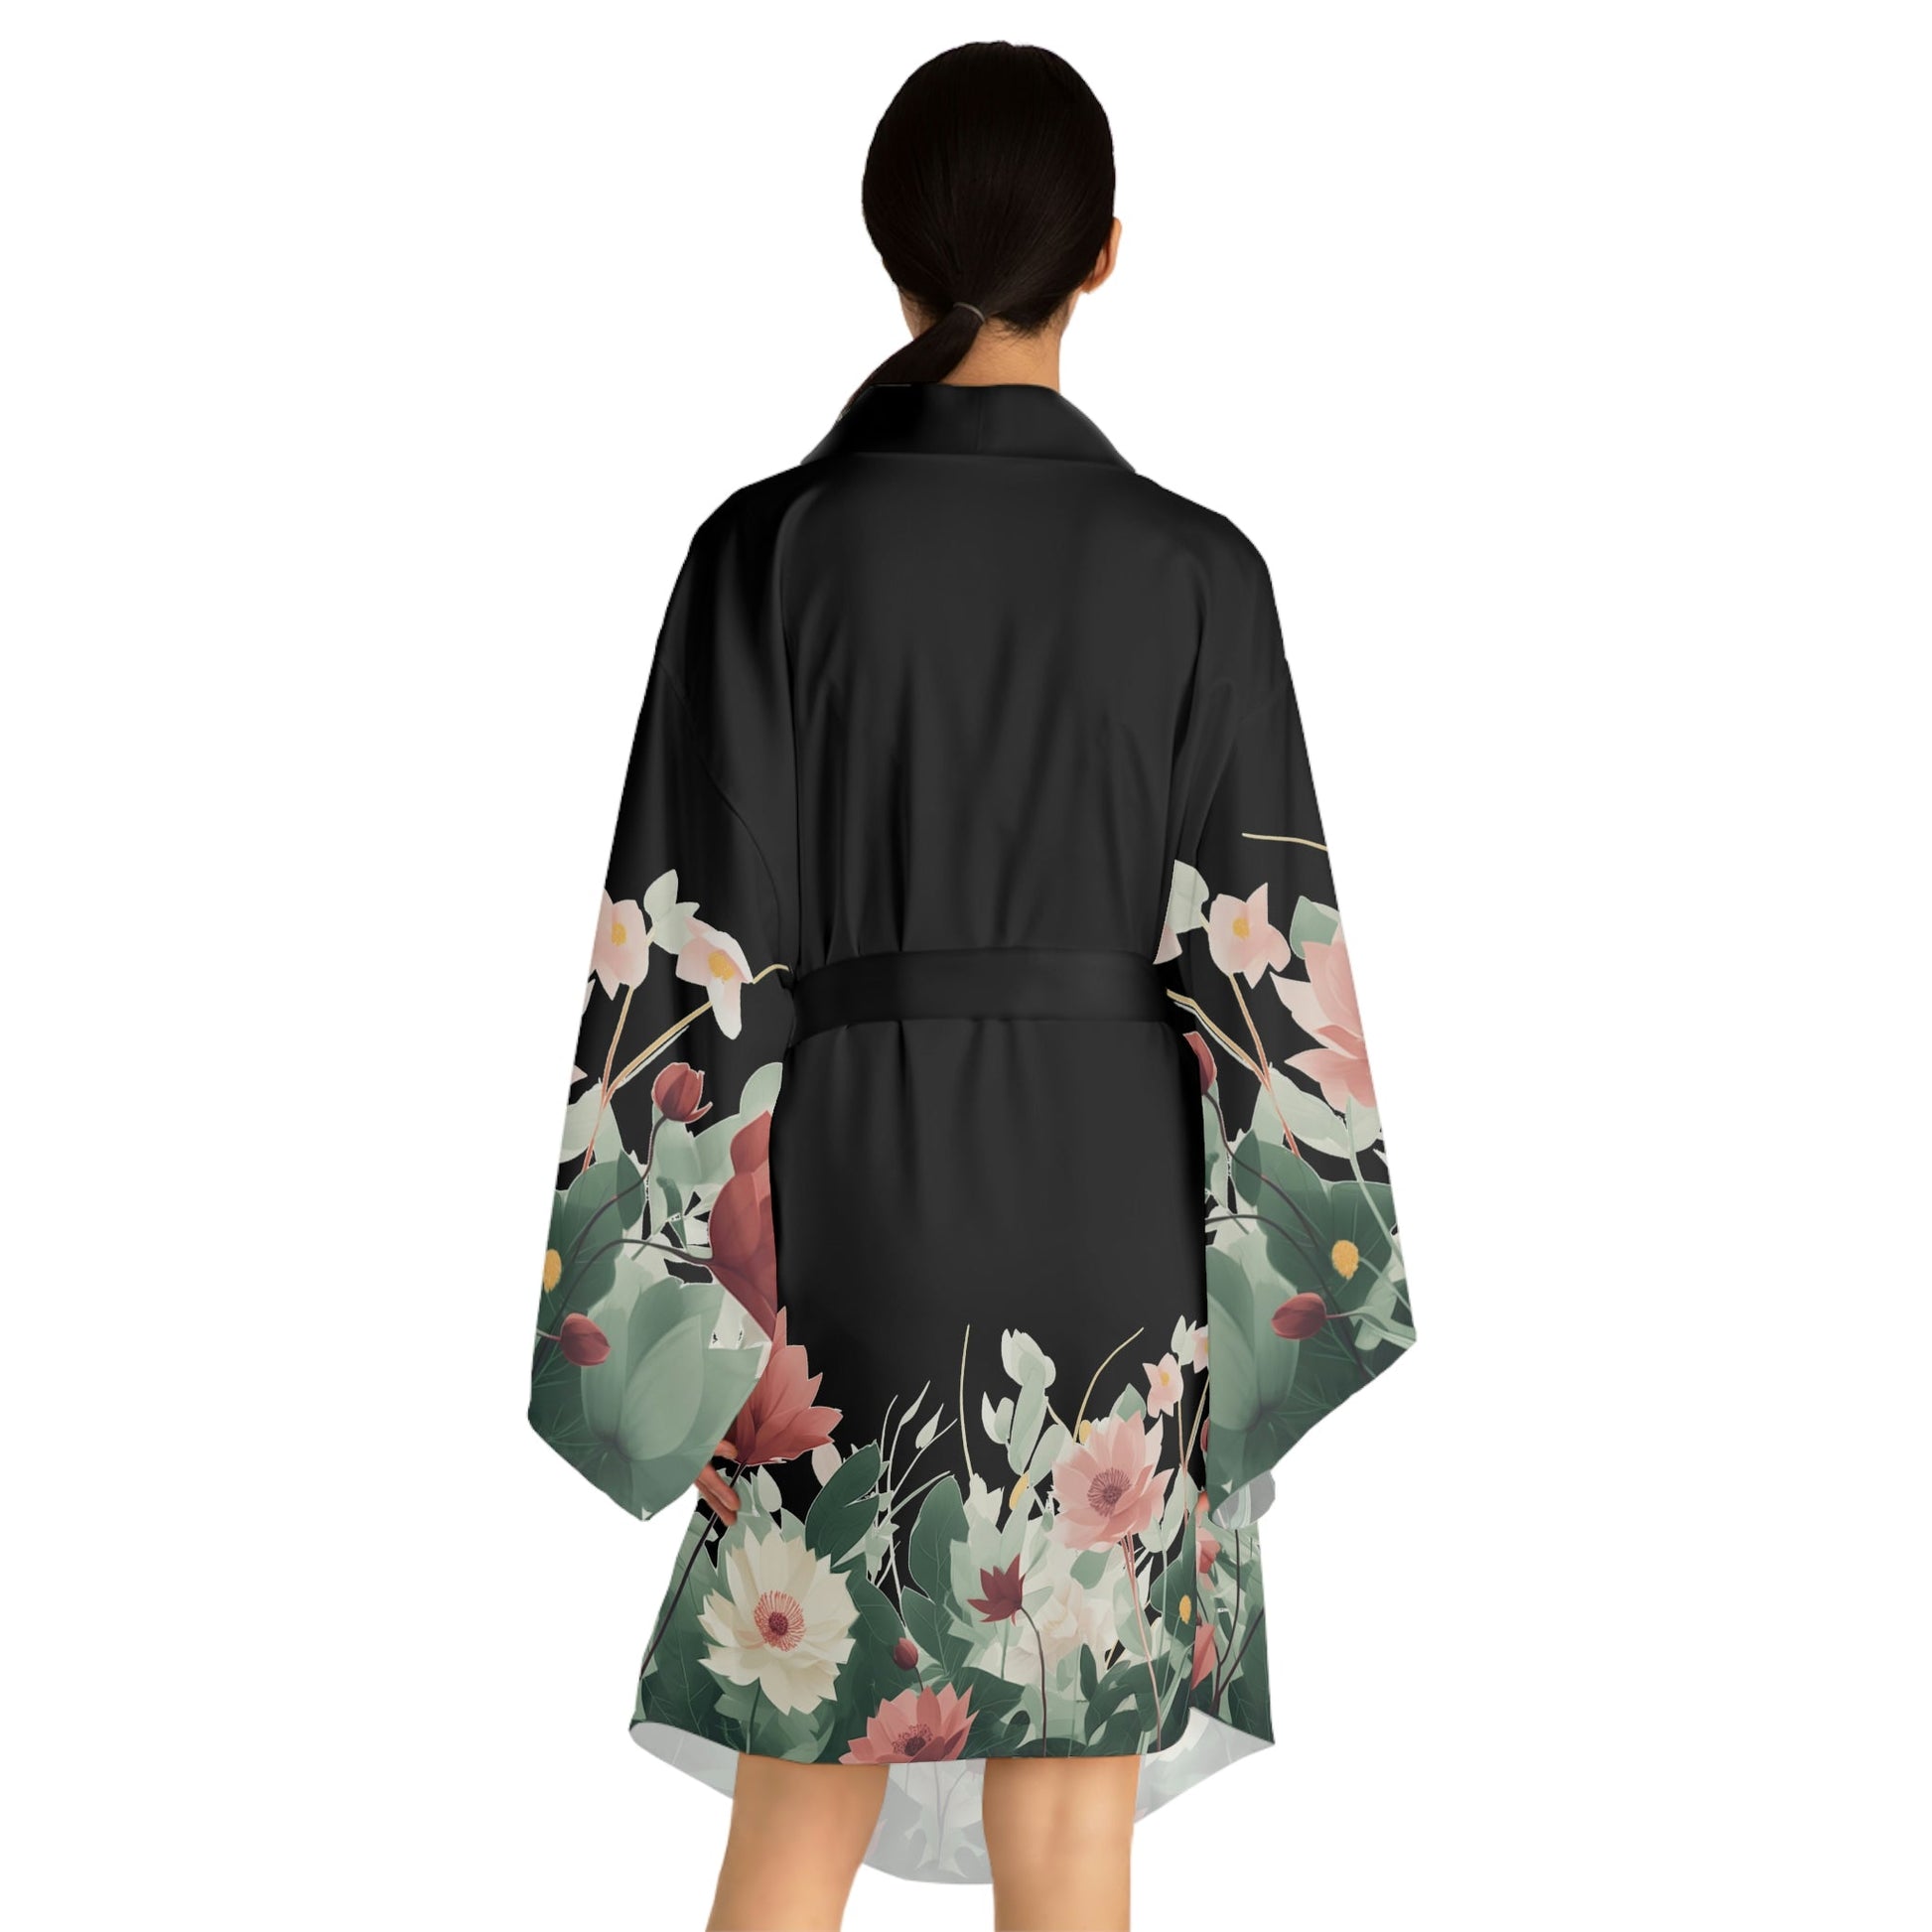 5 Flowers on Black Long Sleeve Kimono Robe by Neduz Designs